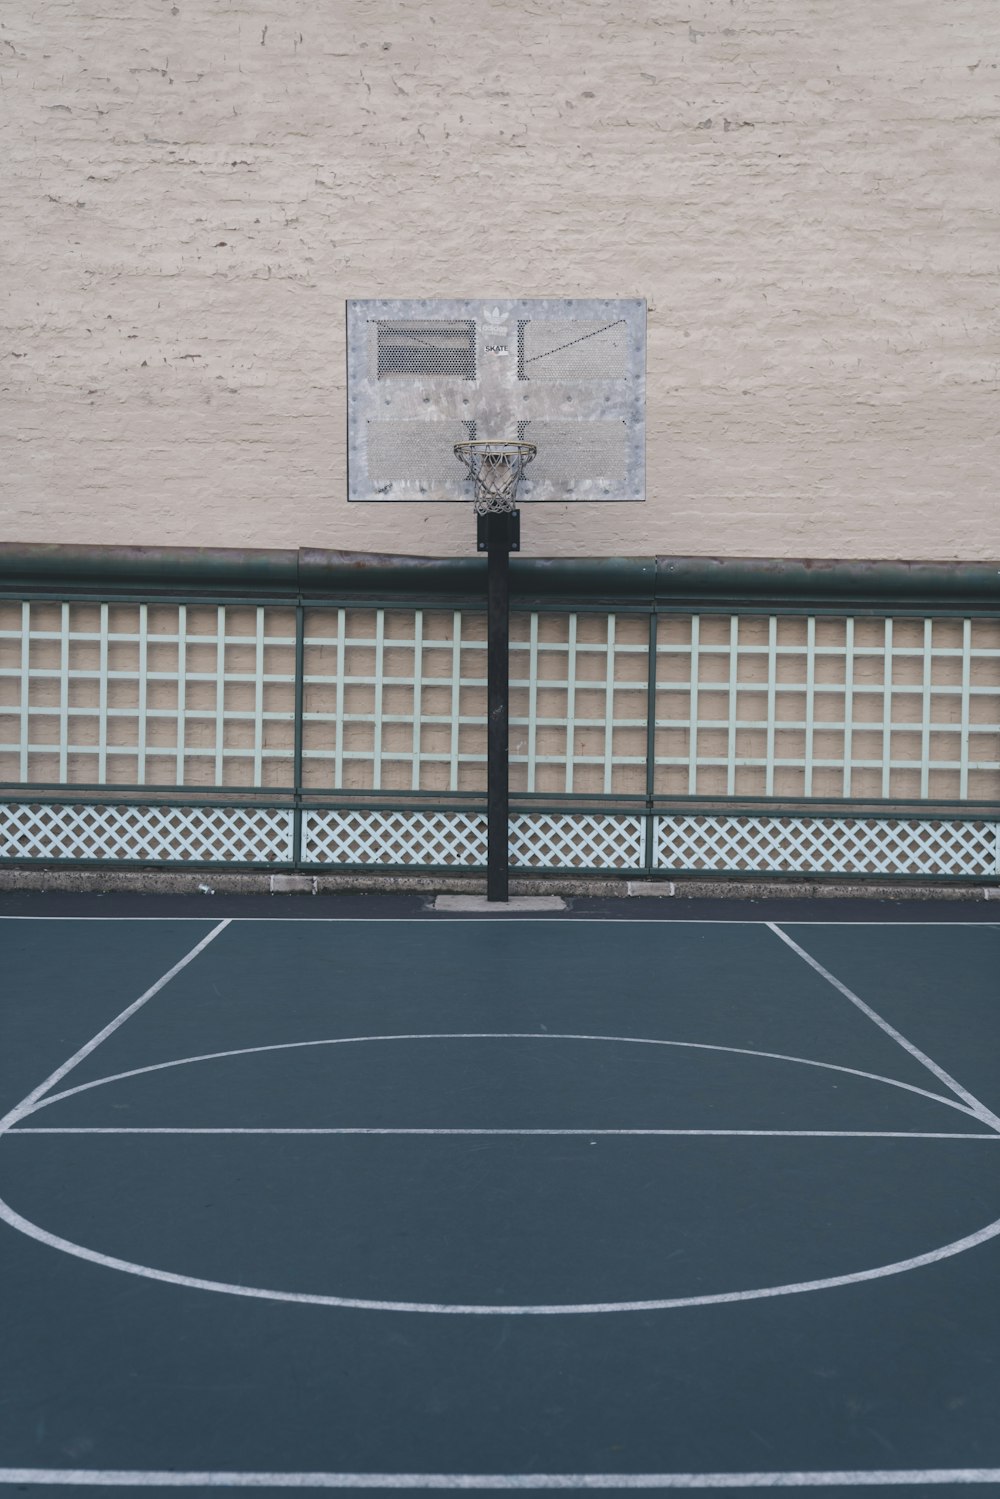 Terrain de basket-ball gris